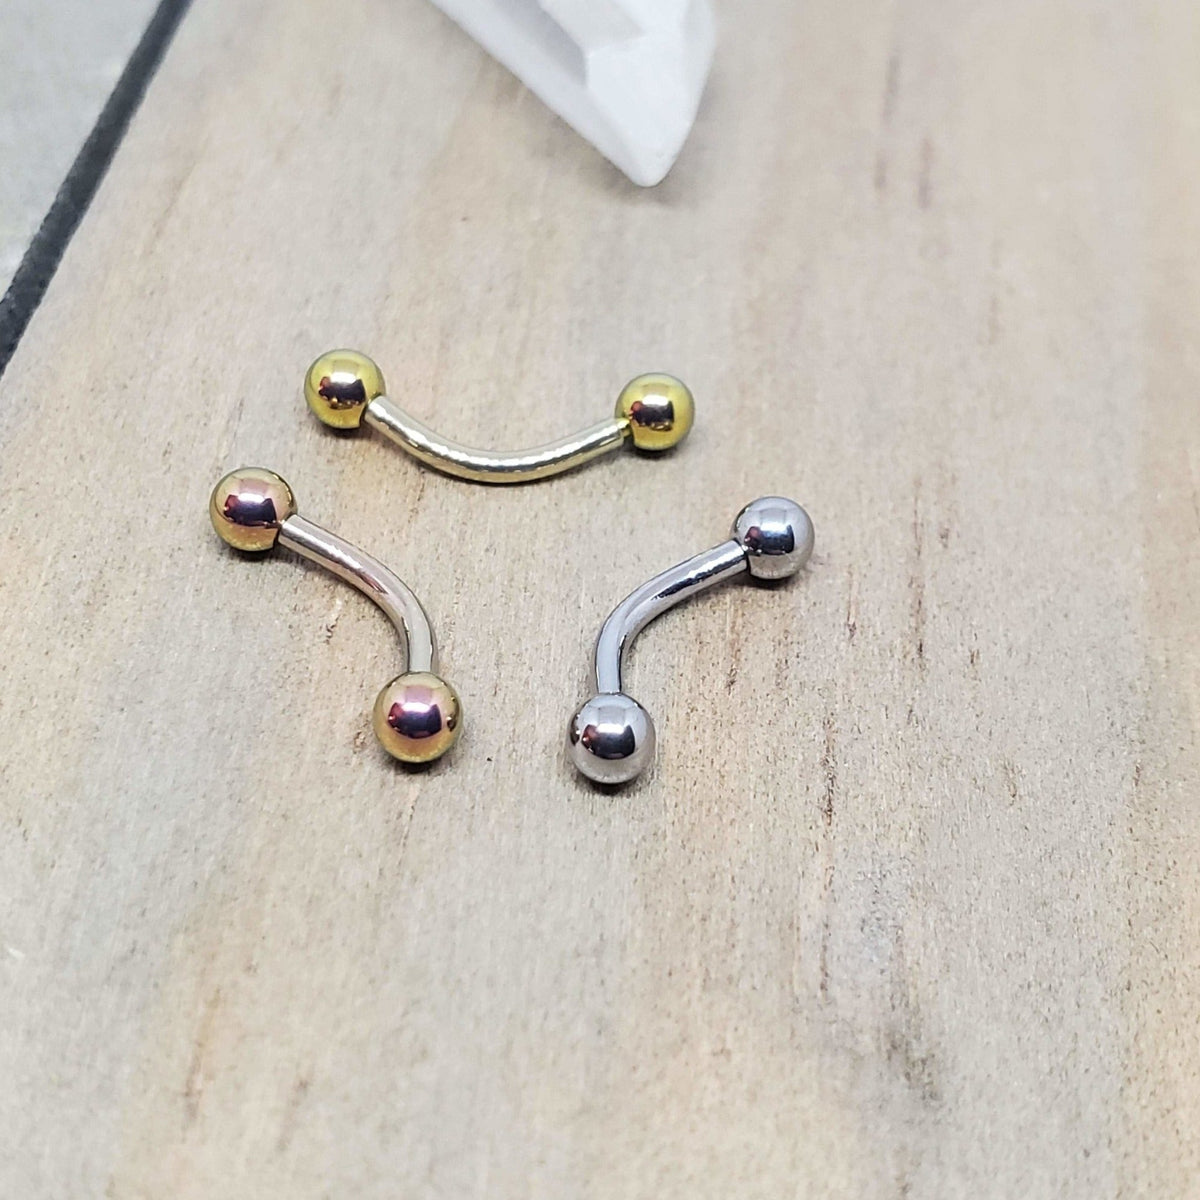 Rook & Snug Piercing Jewelry – Tagged "vertical stud" – Siren Body Jewelry